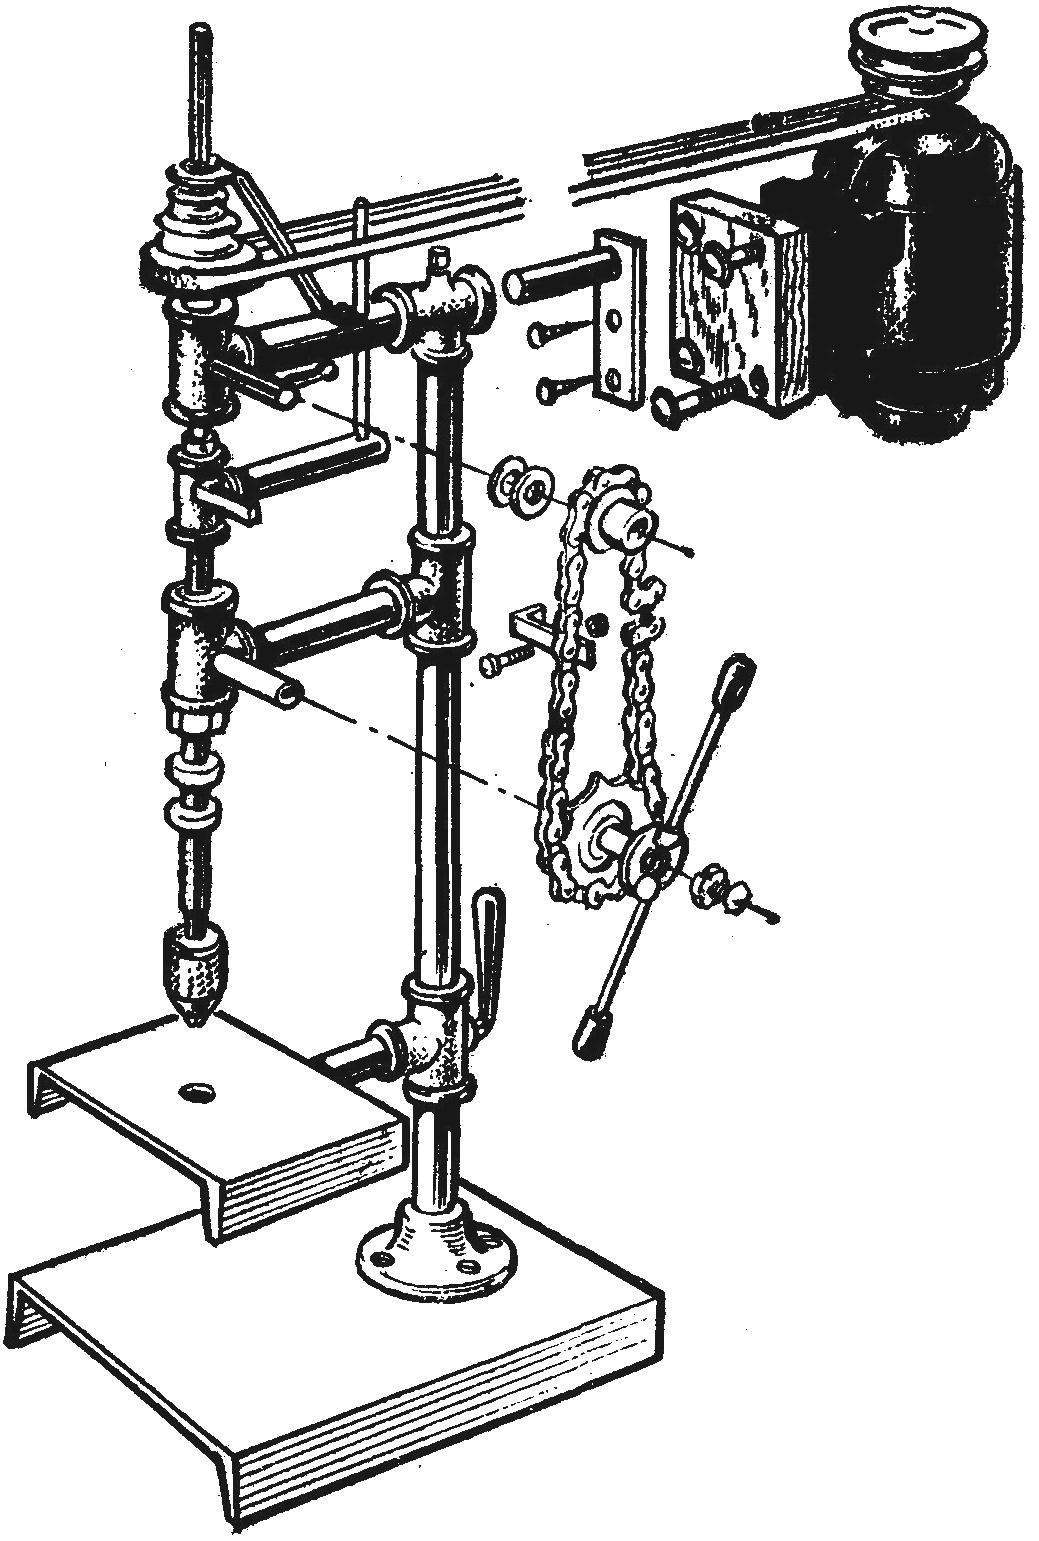 Fig. 1. Drilling machine.